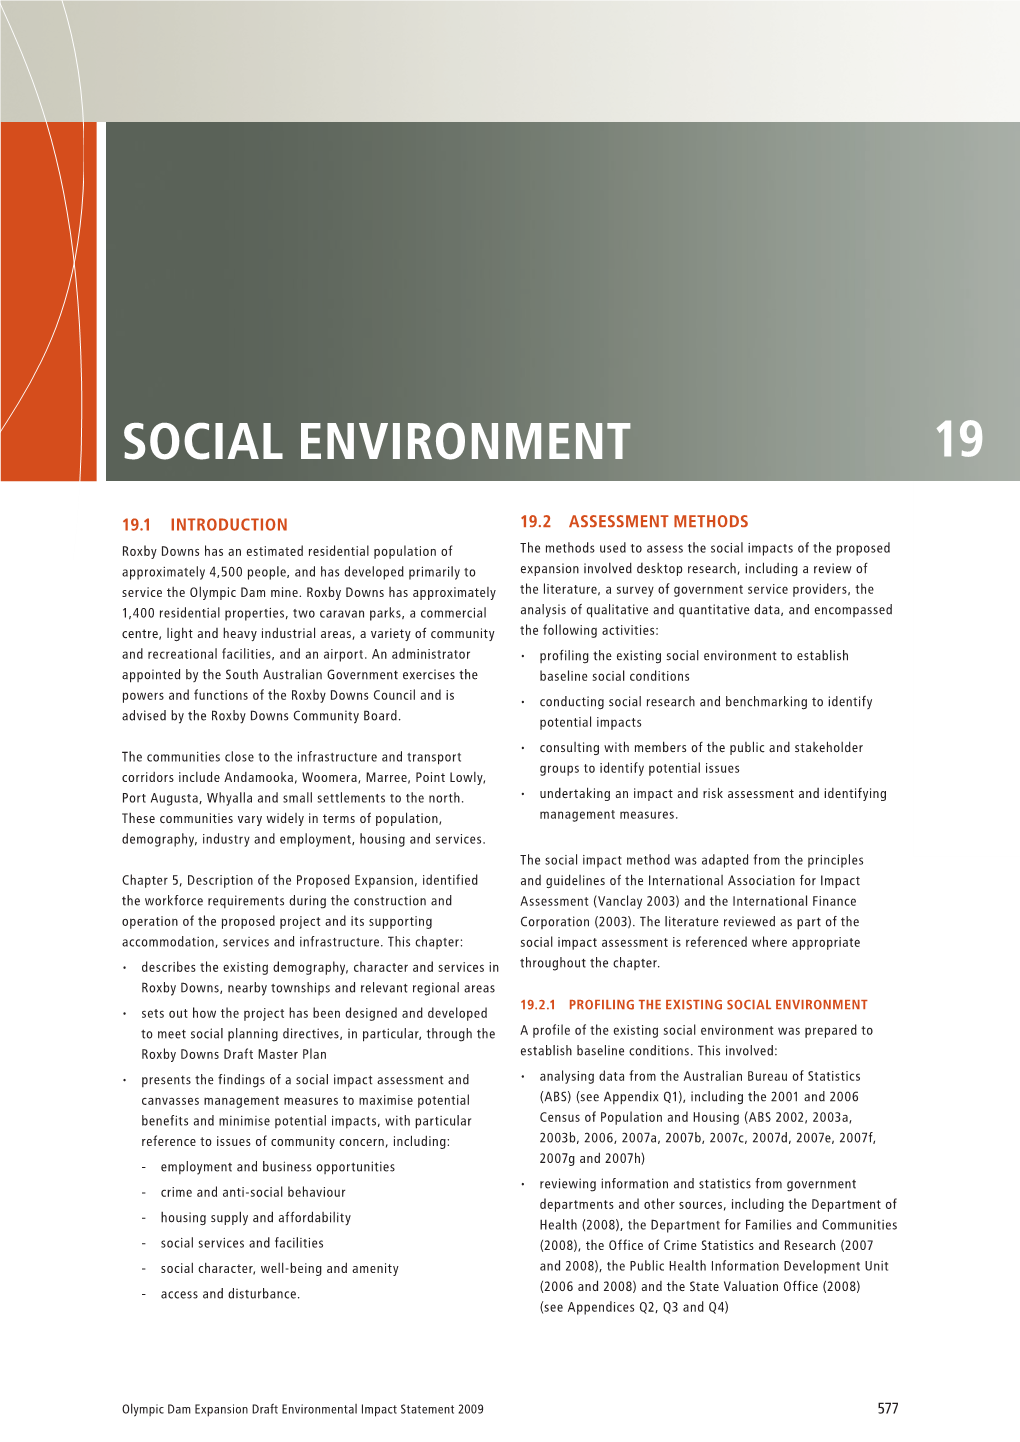 Chapter 19 Social Environment